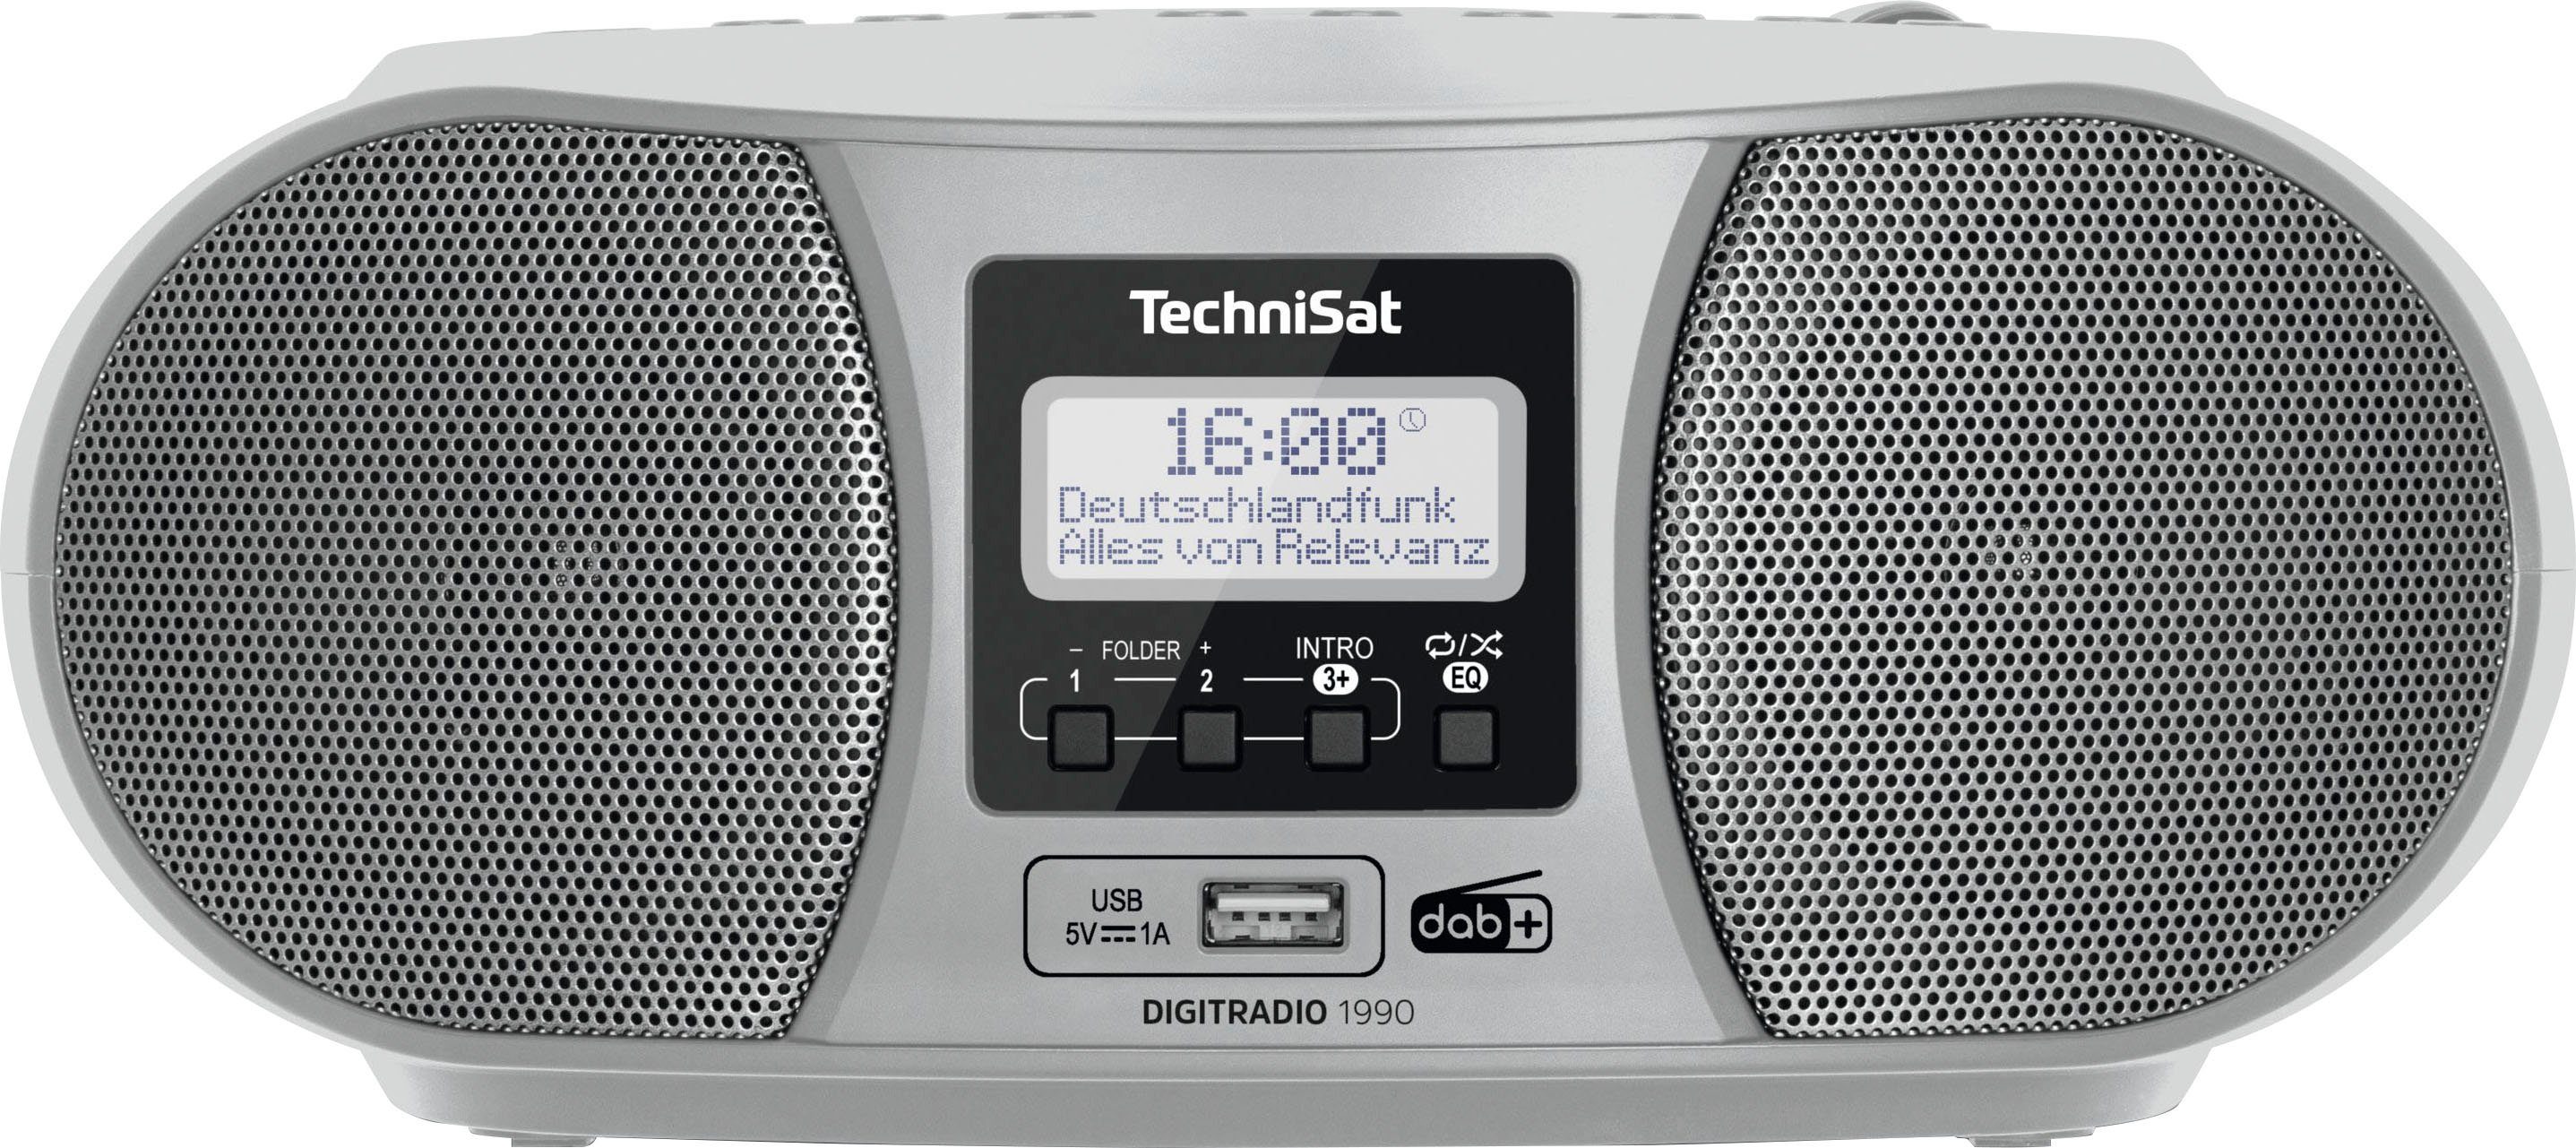 TechniSat DIGITRADIO 1990 W, 3 CD-Player) Digitalradio mit (DAB) (Digitalradio RDS, UKW (DAB), silber